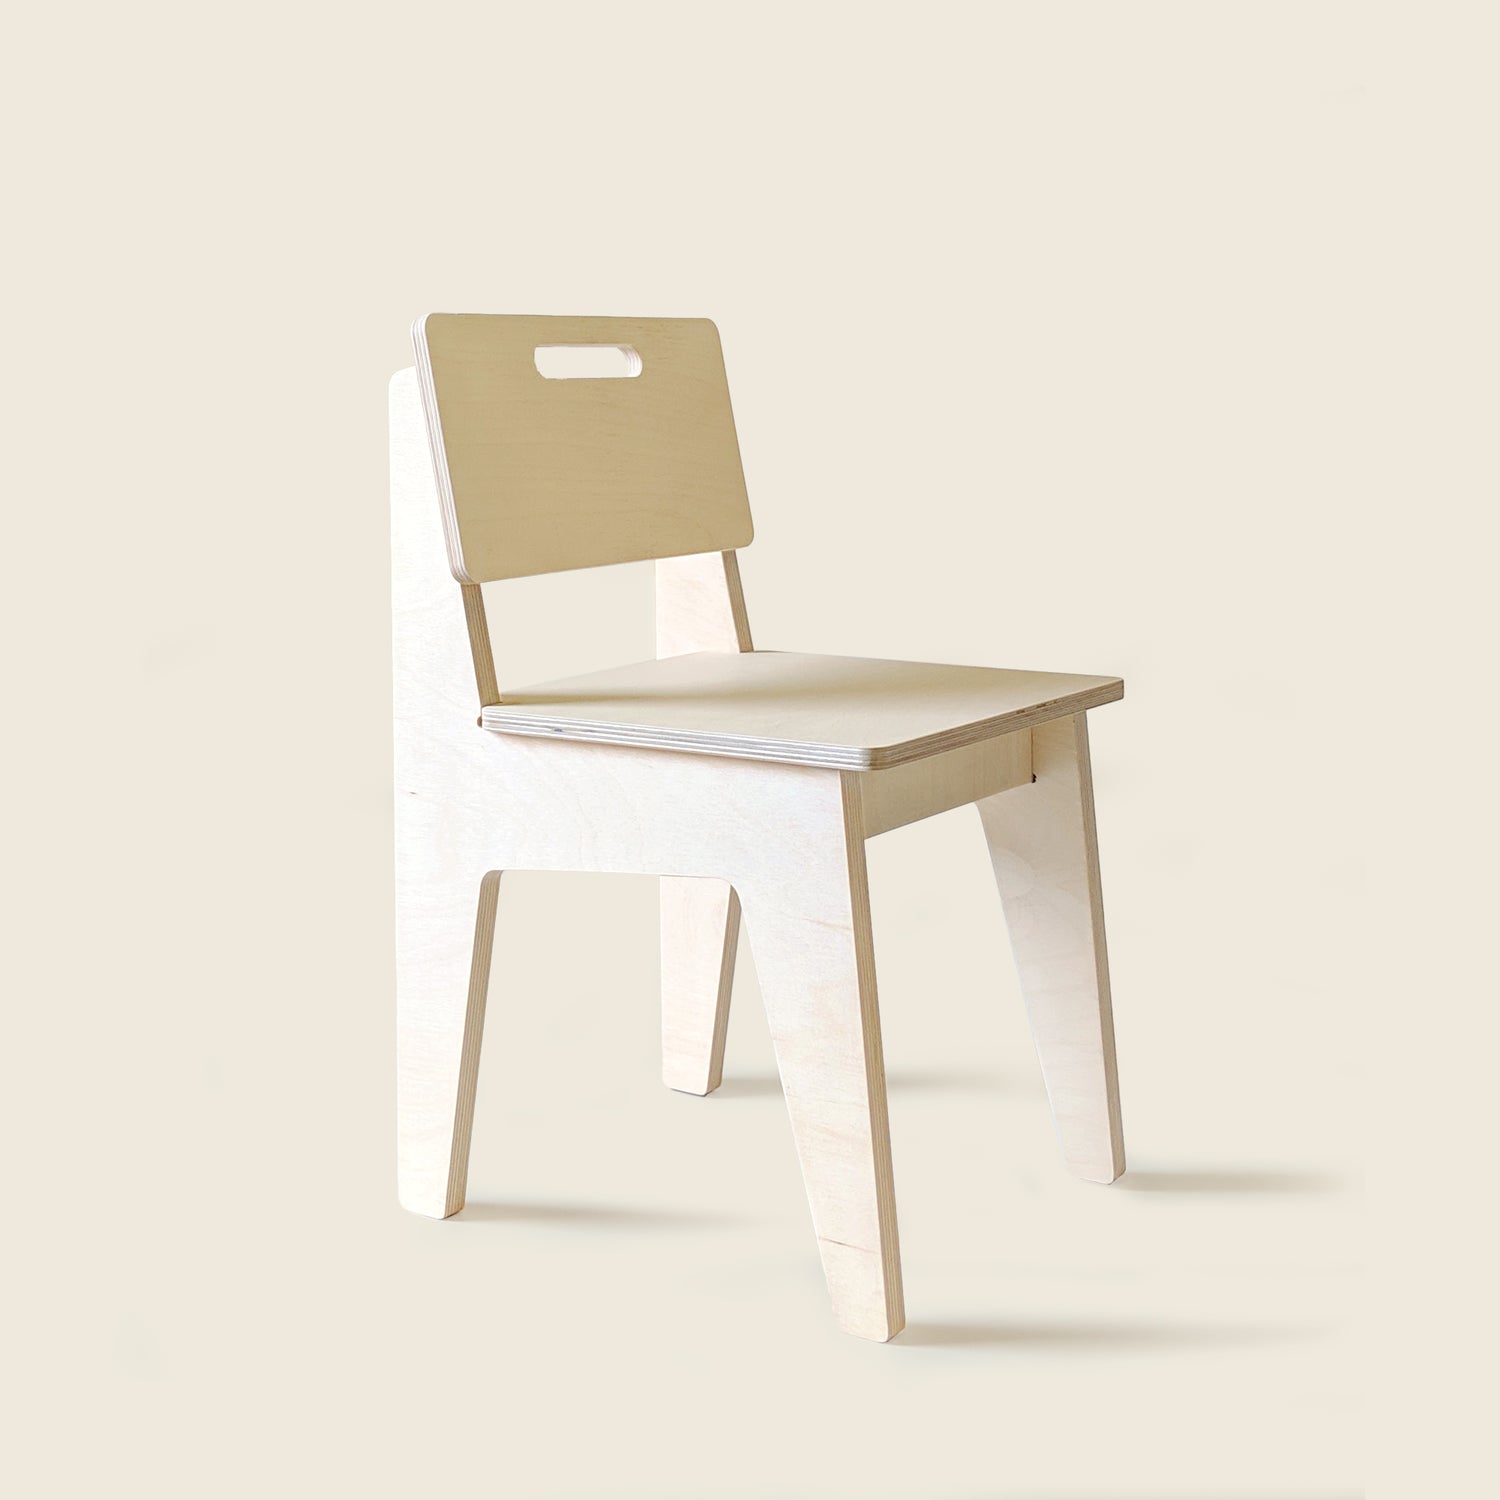 SEAT - Just Birch : 100% FSC Certified Wooden Kids Chair by Mapayah - Mapayah